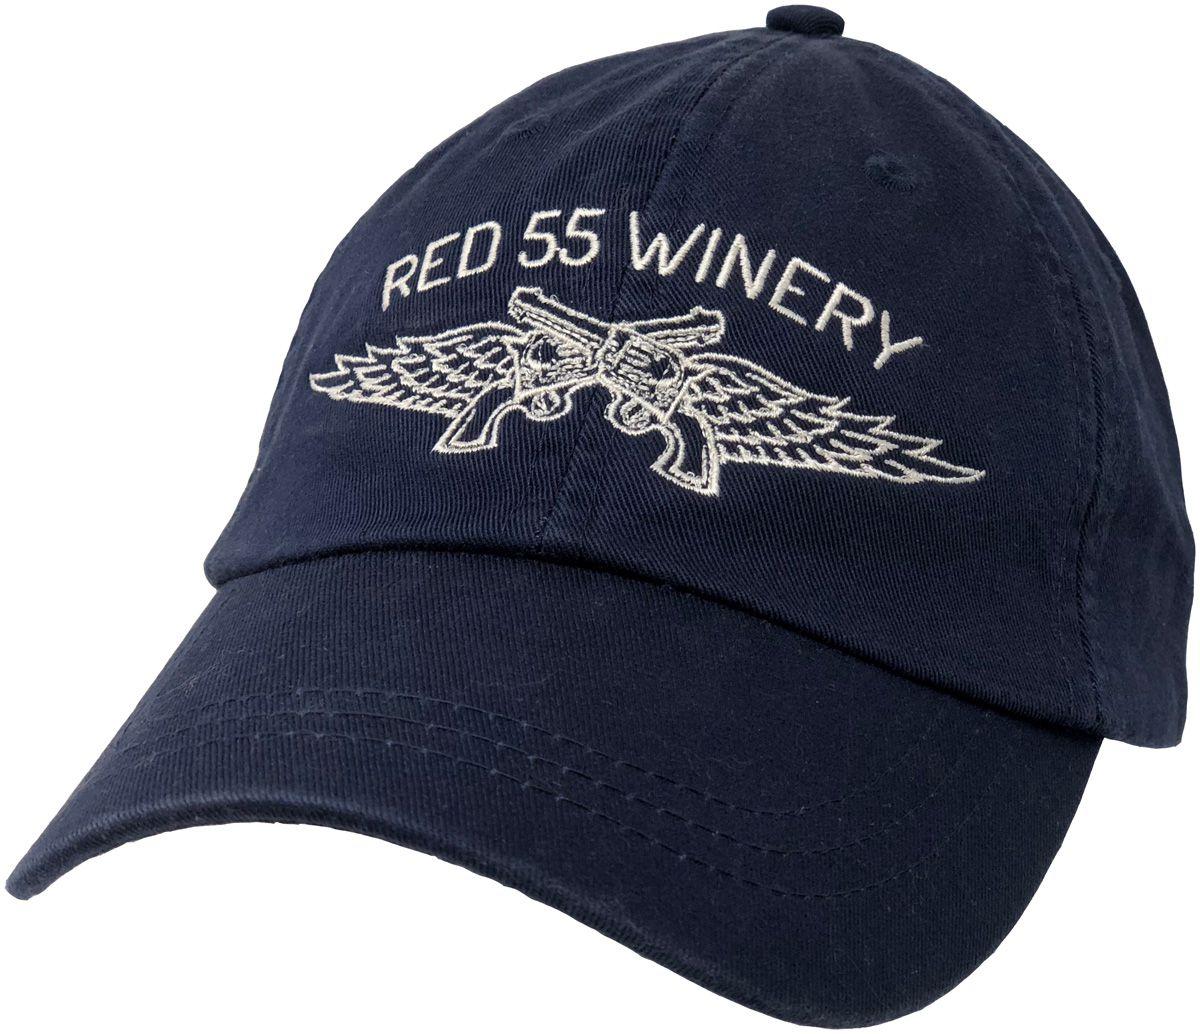 Red Navy Logo - Navy Logo Cap - Red 55 Winery